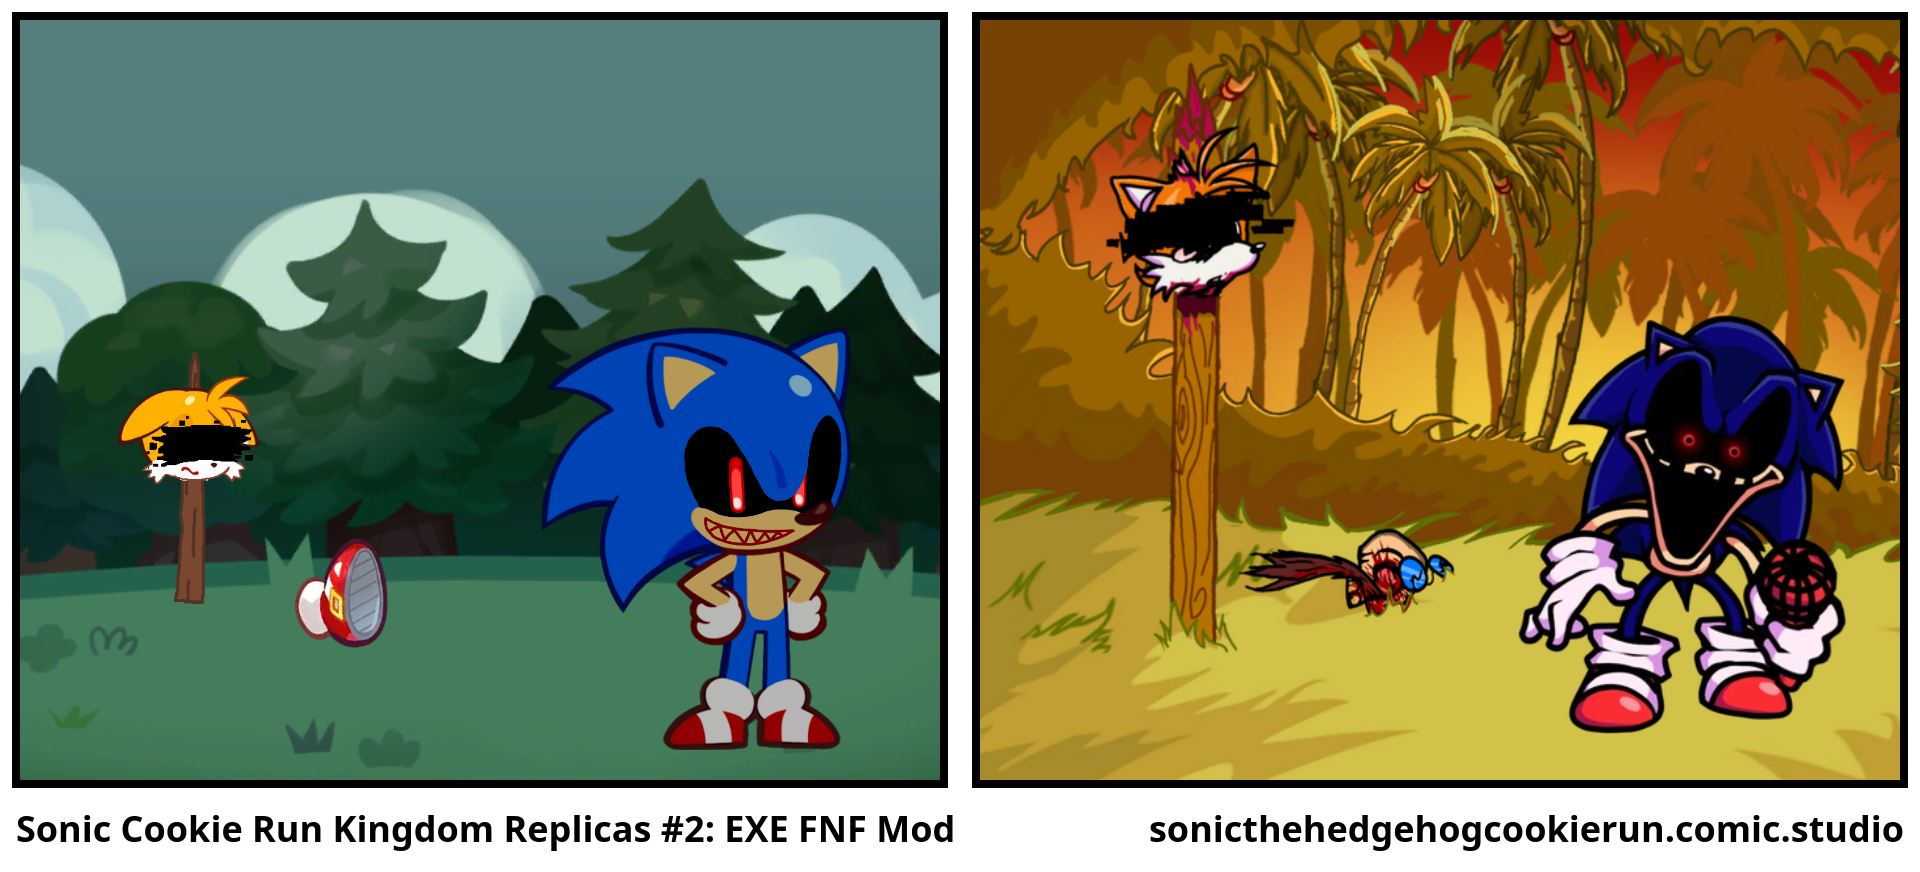 Sonic Cookie Run Kingdom Replicas #2: EXE FNF Mod